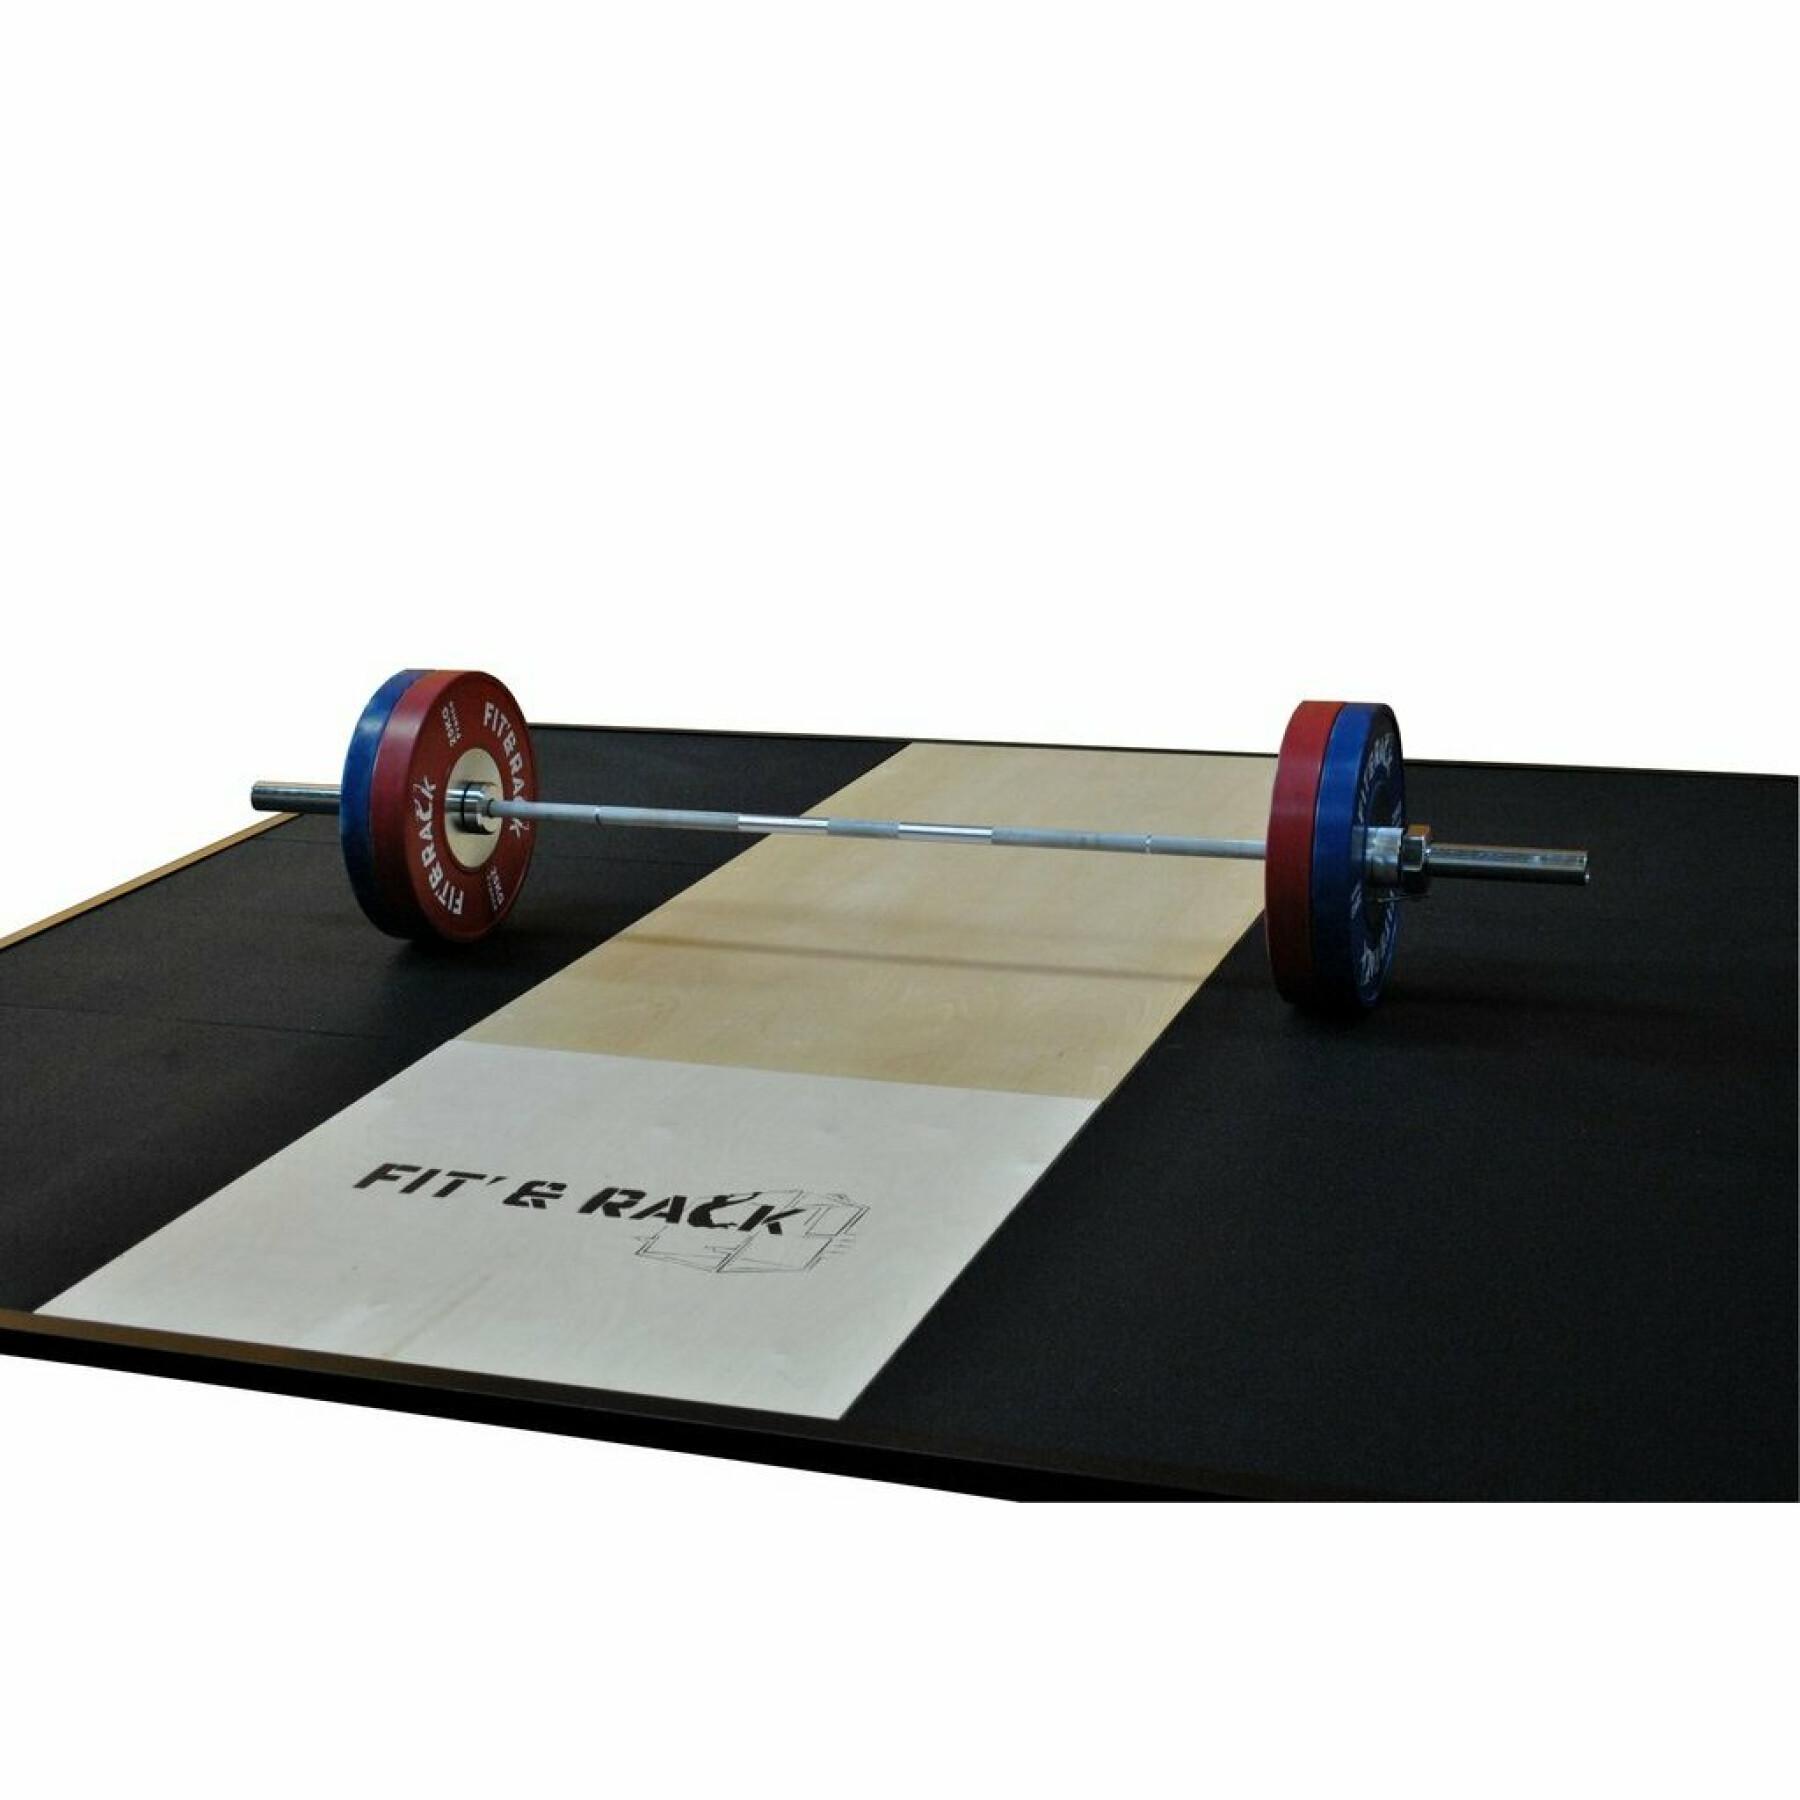 Weightlifting platform Fit & Rack 1mx3m Ep40